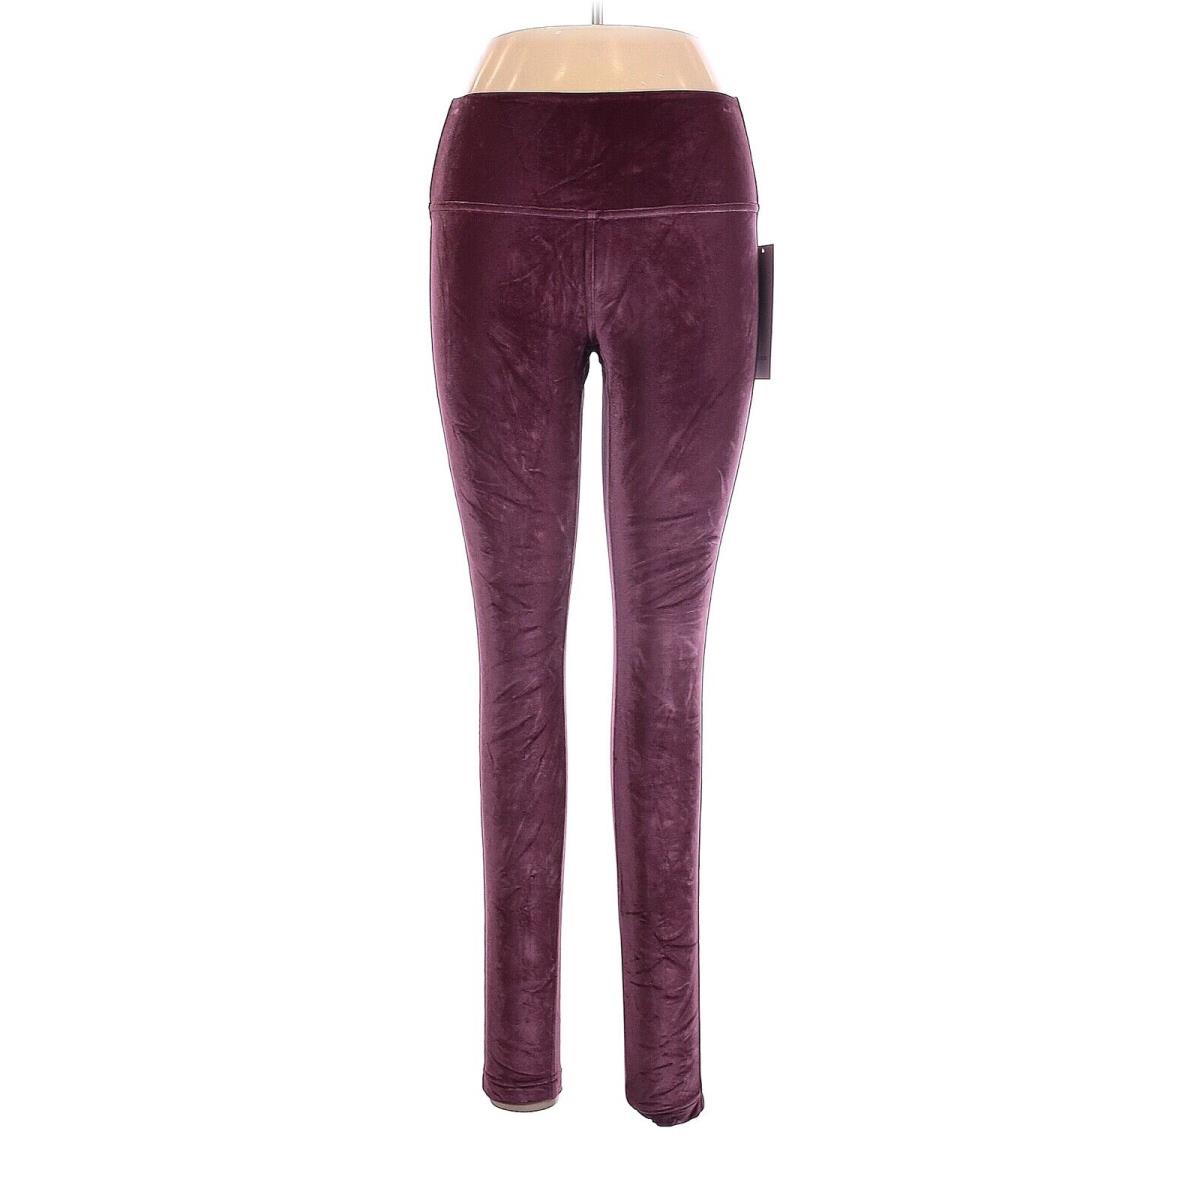 Buy the Lululemon Wunder Lounge Activewear Purple Velvet Leggings Size 6